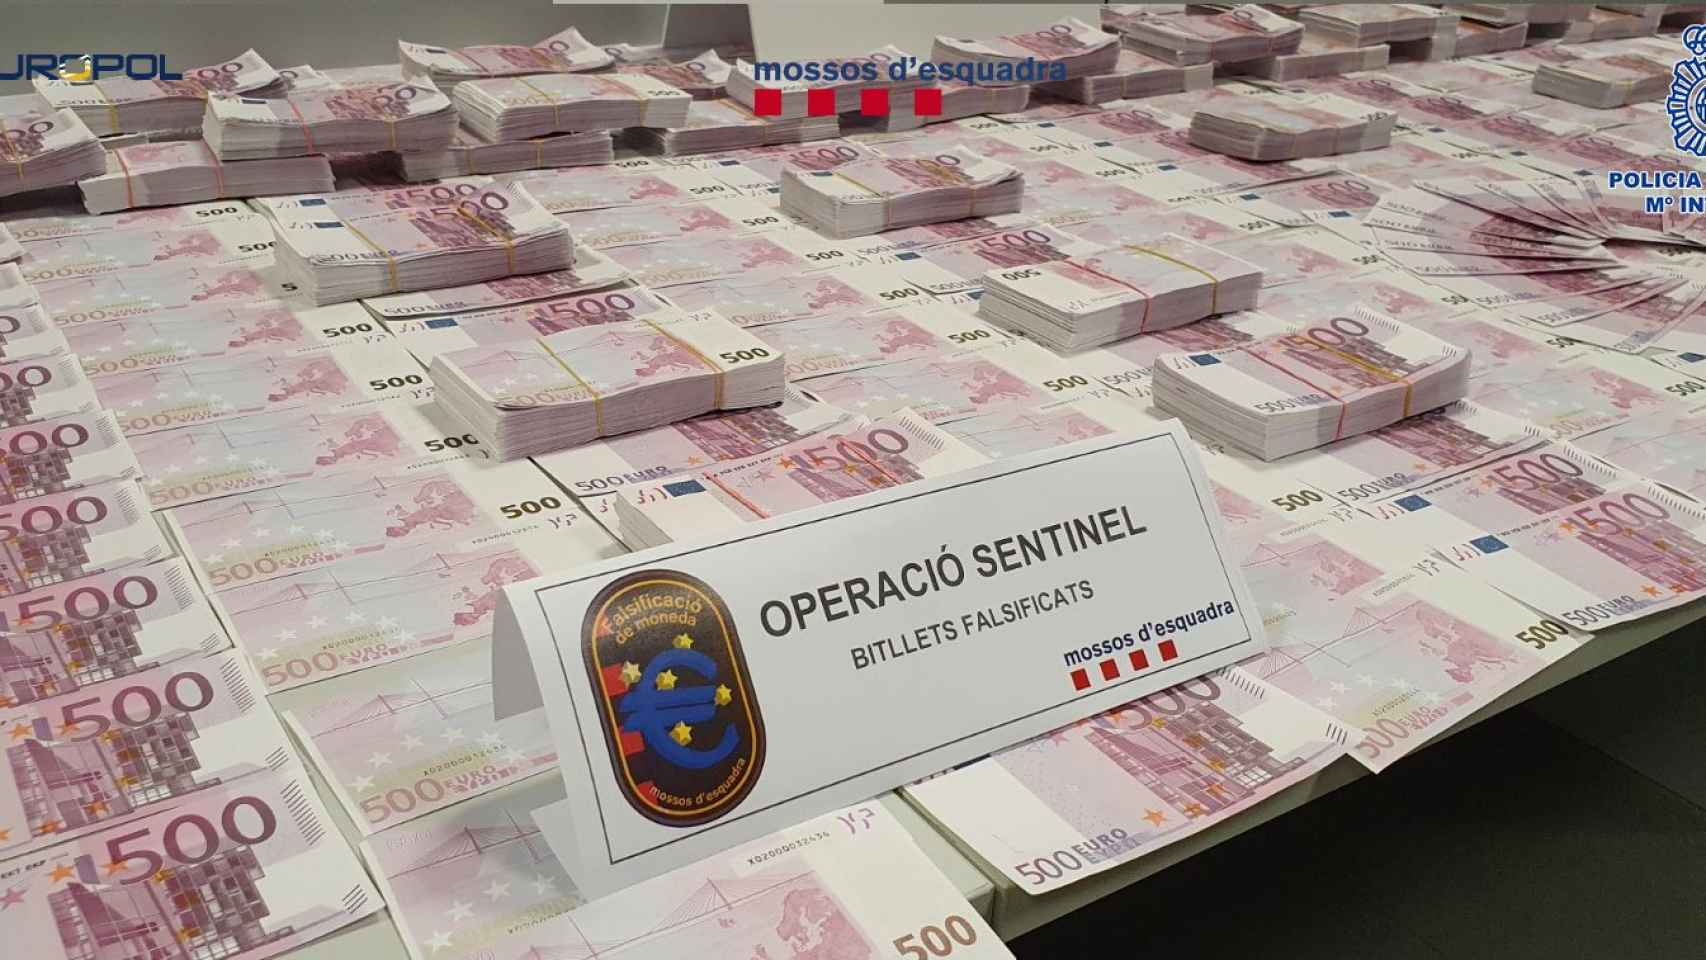 Billetes falsos requisados en la operación / MOSSOS D'ESQUADRA